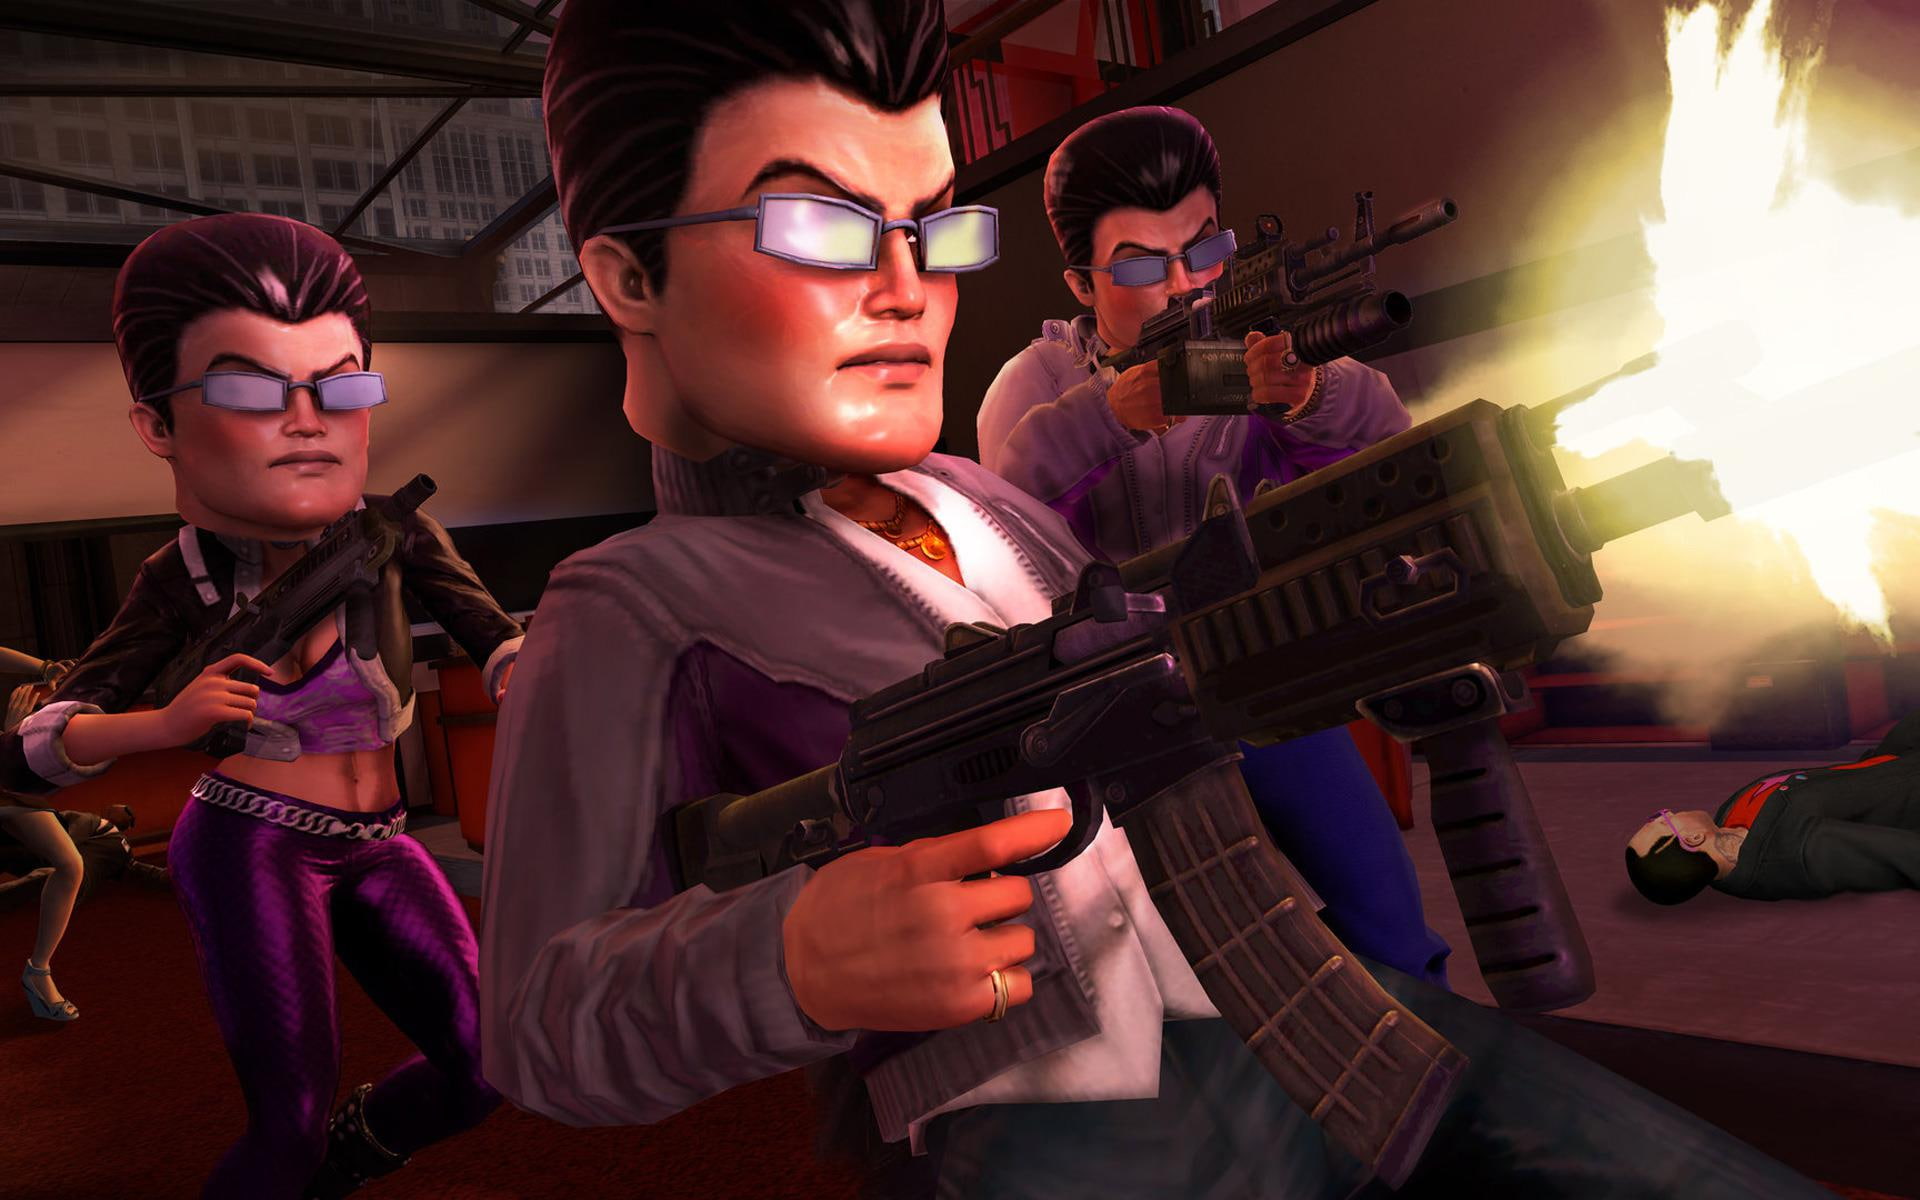 Saints Row, three man wearing sunglasses and holding rifles characters